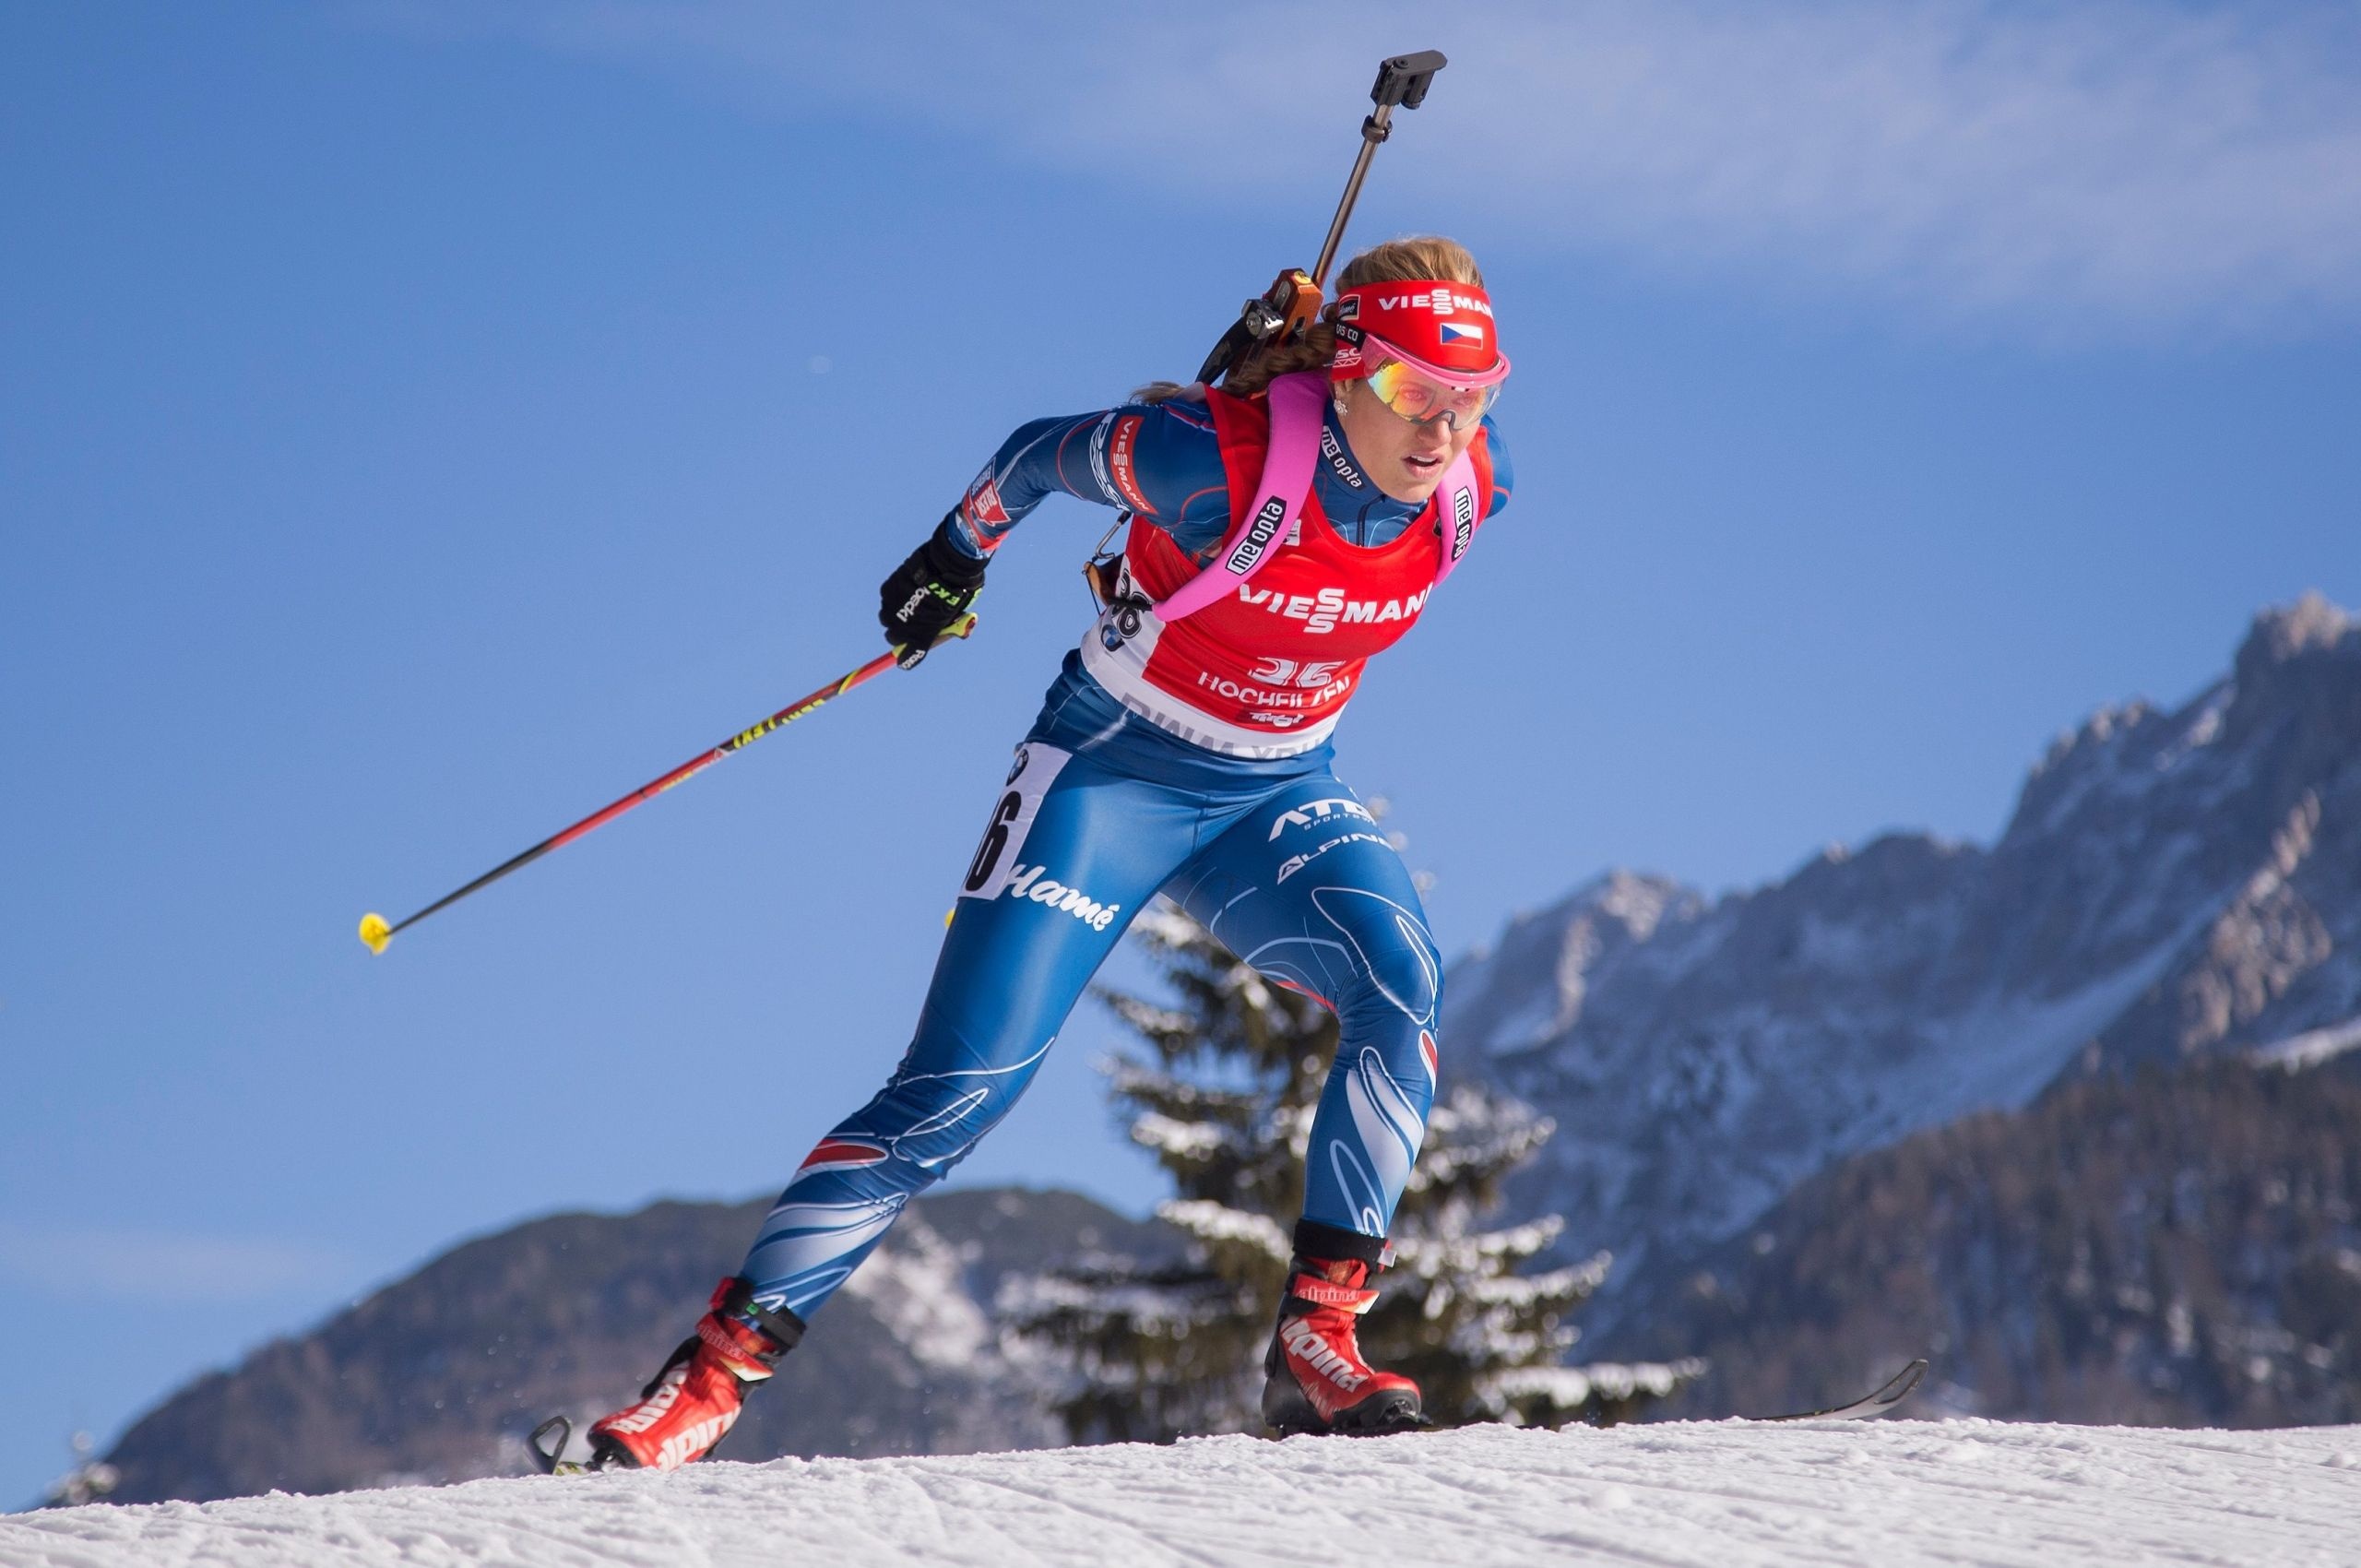 Biathlon: Cross-country skiing, Biathlon World Cup, The shooting rounds. 2560x1700 HD Background.